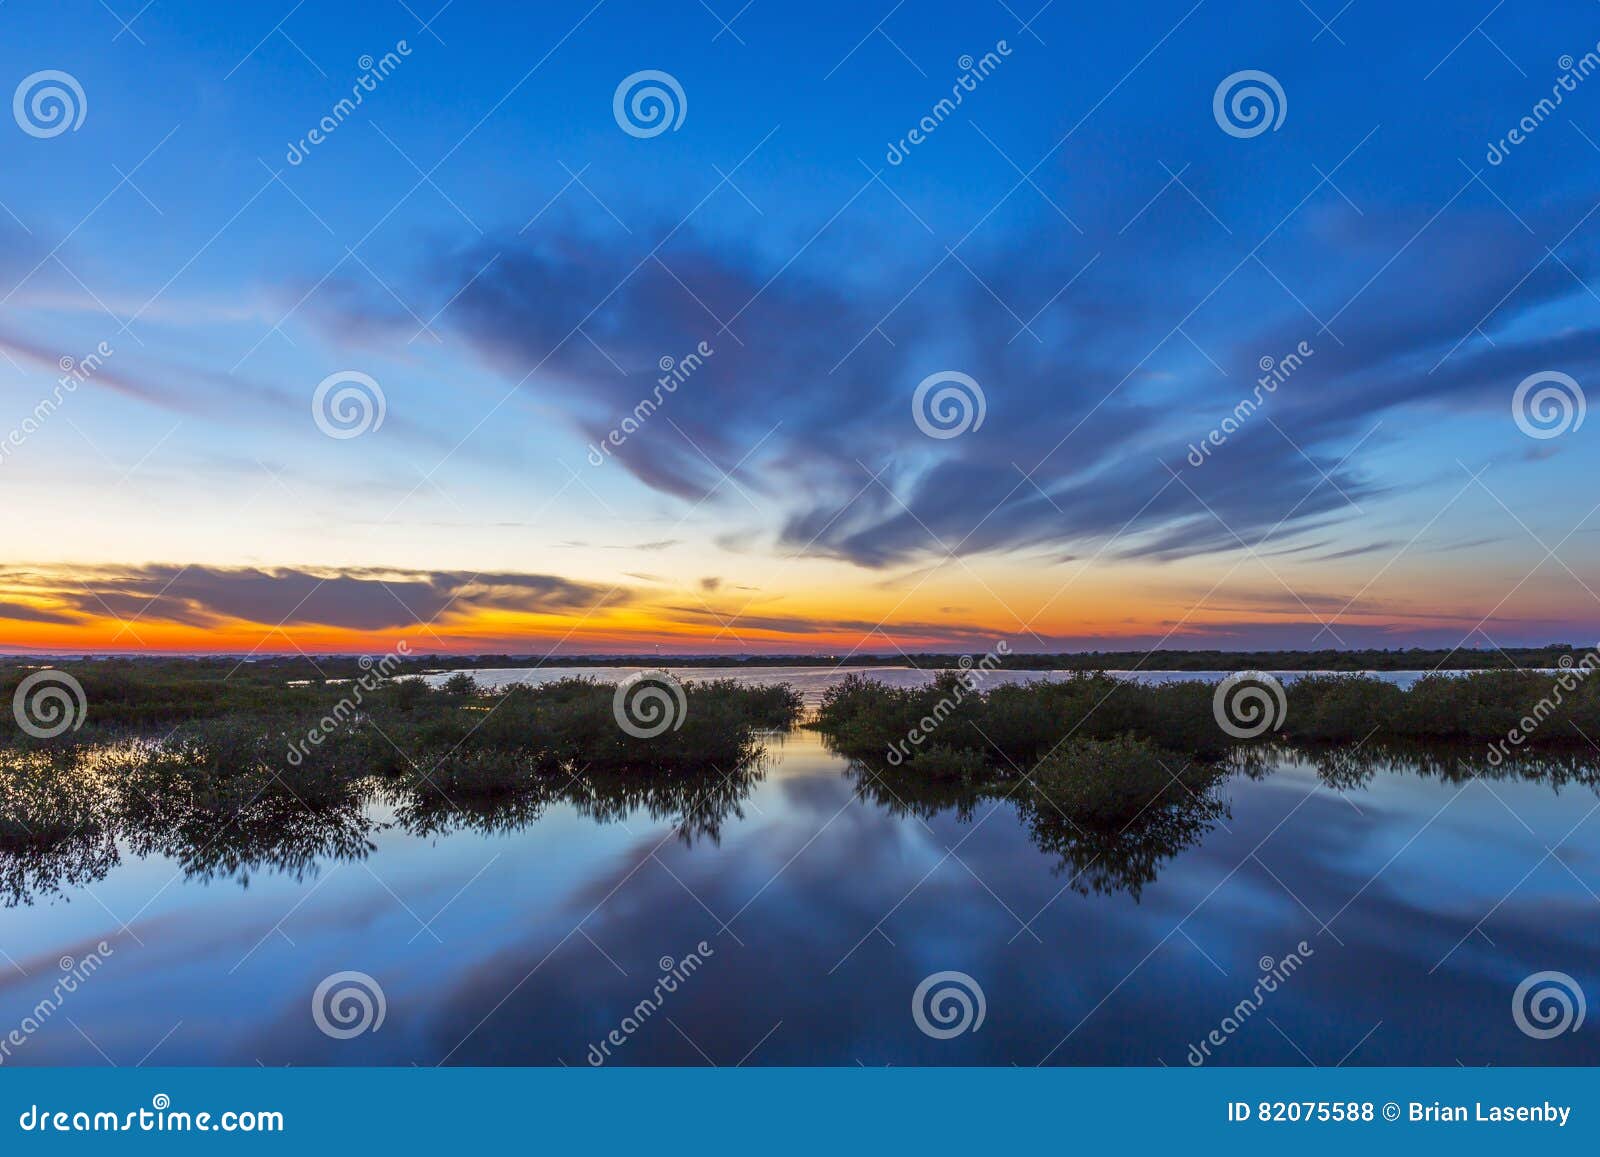 sunset over water - merritt island wildlife refuge, florida